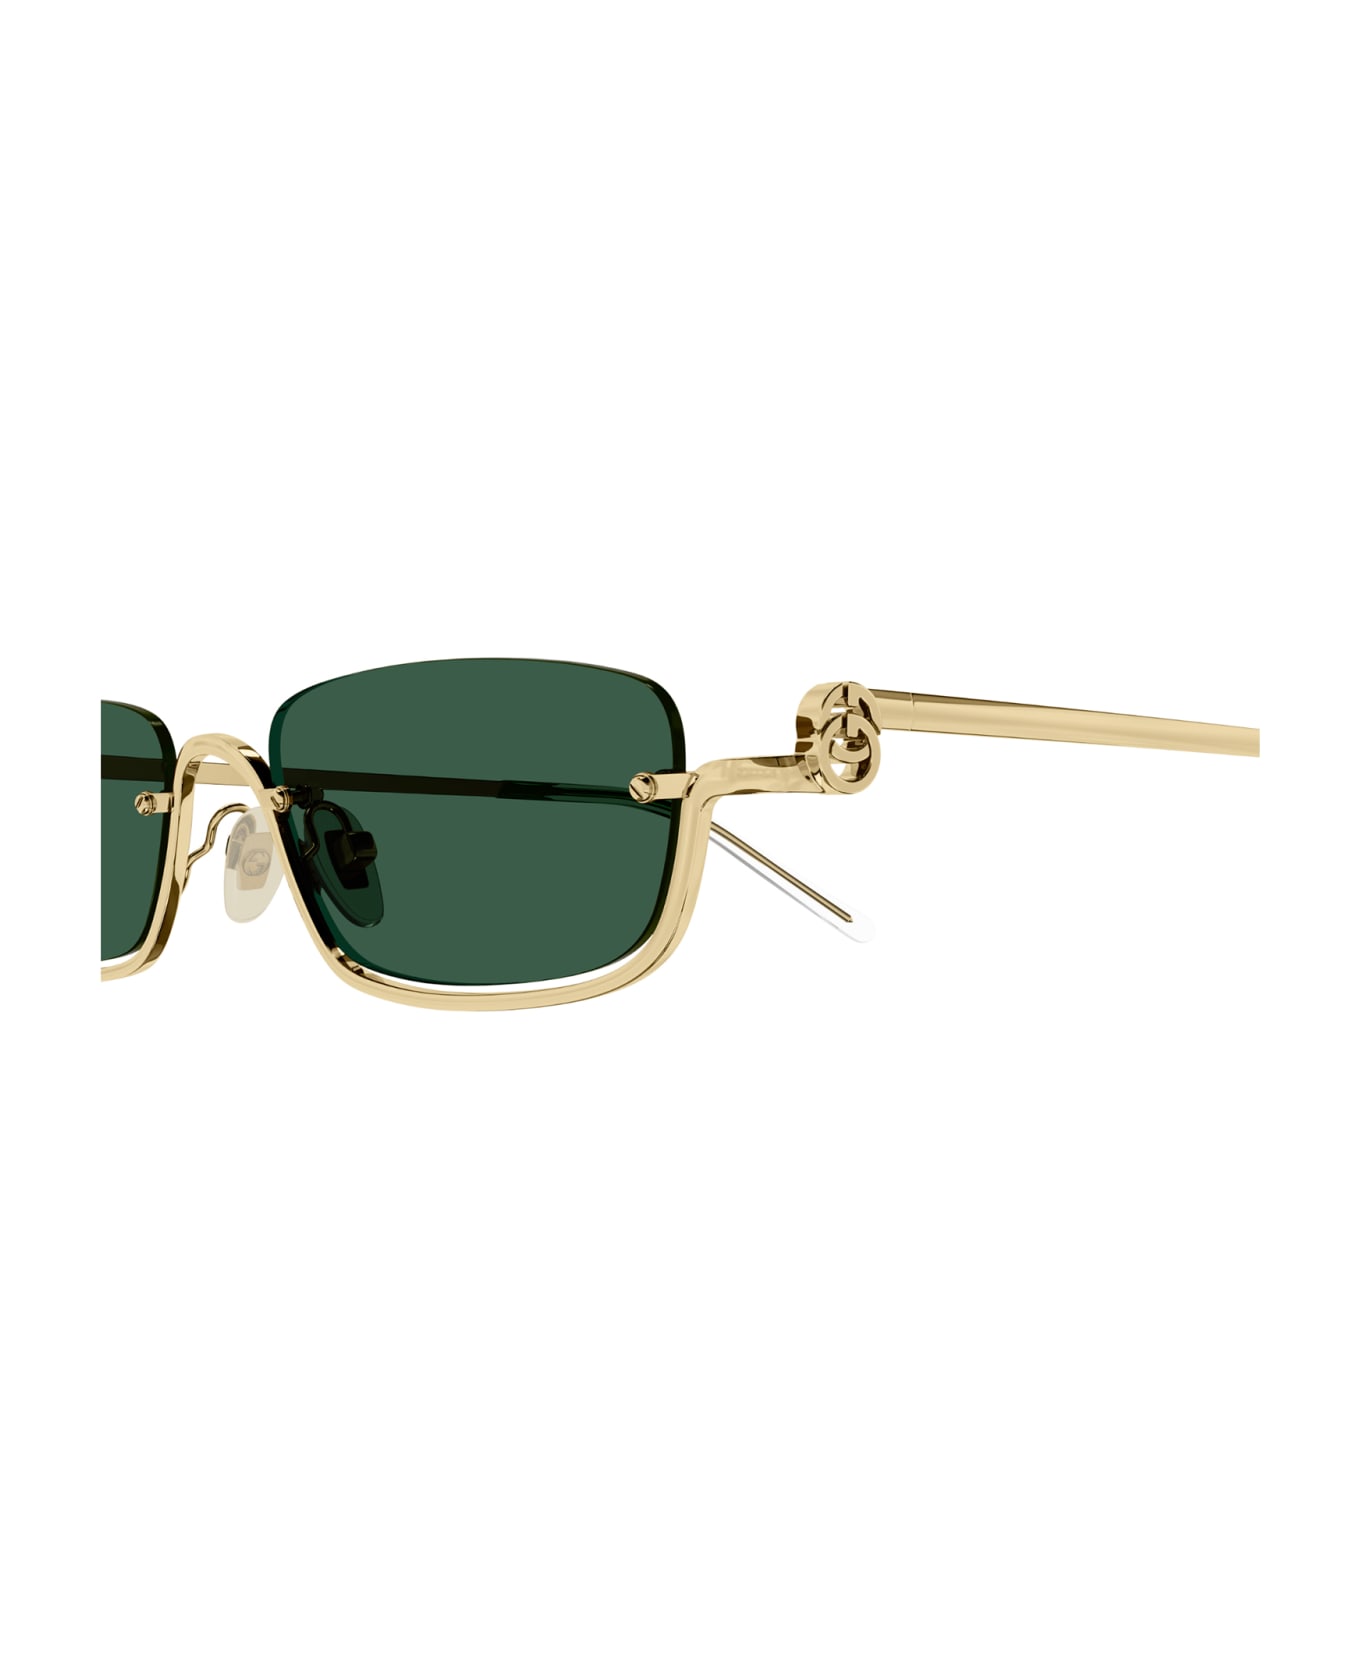 Gucci Eyewear 1fa64li0a - 002 gold gold green